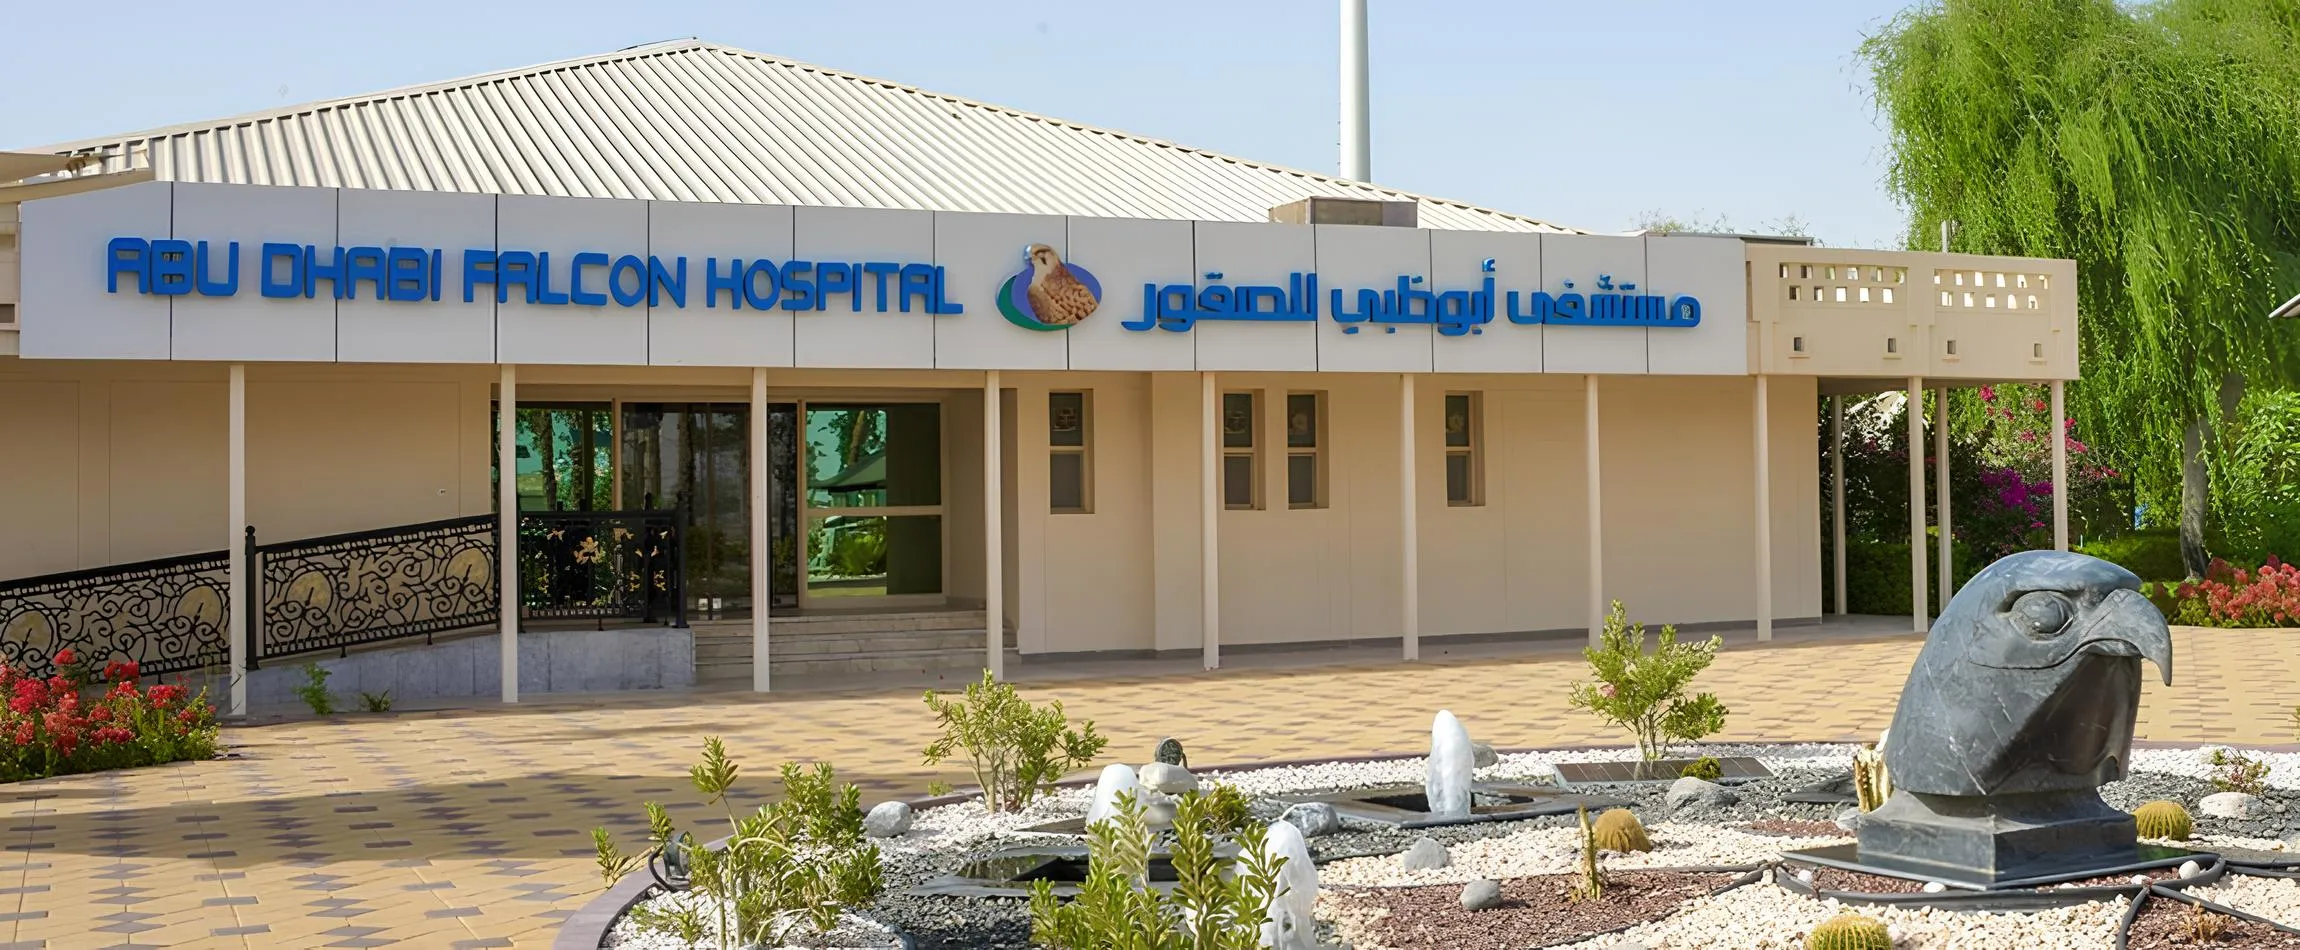 The Falcon Hospital